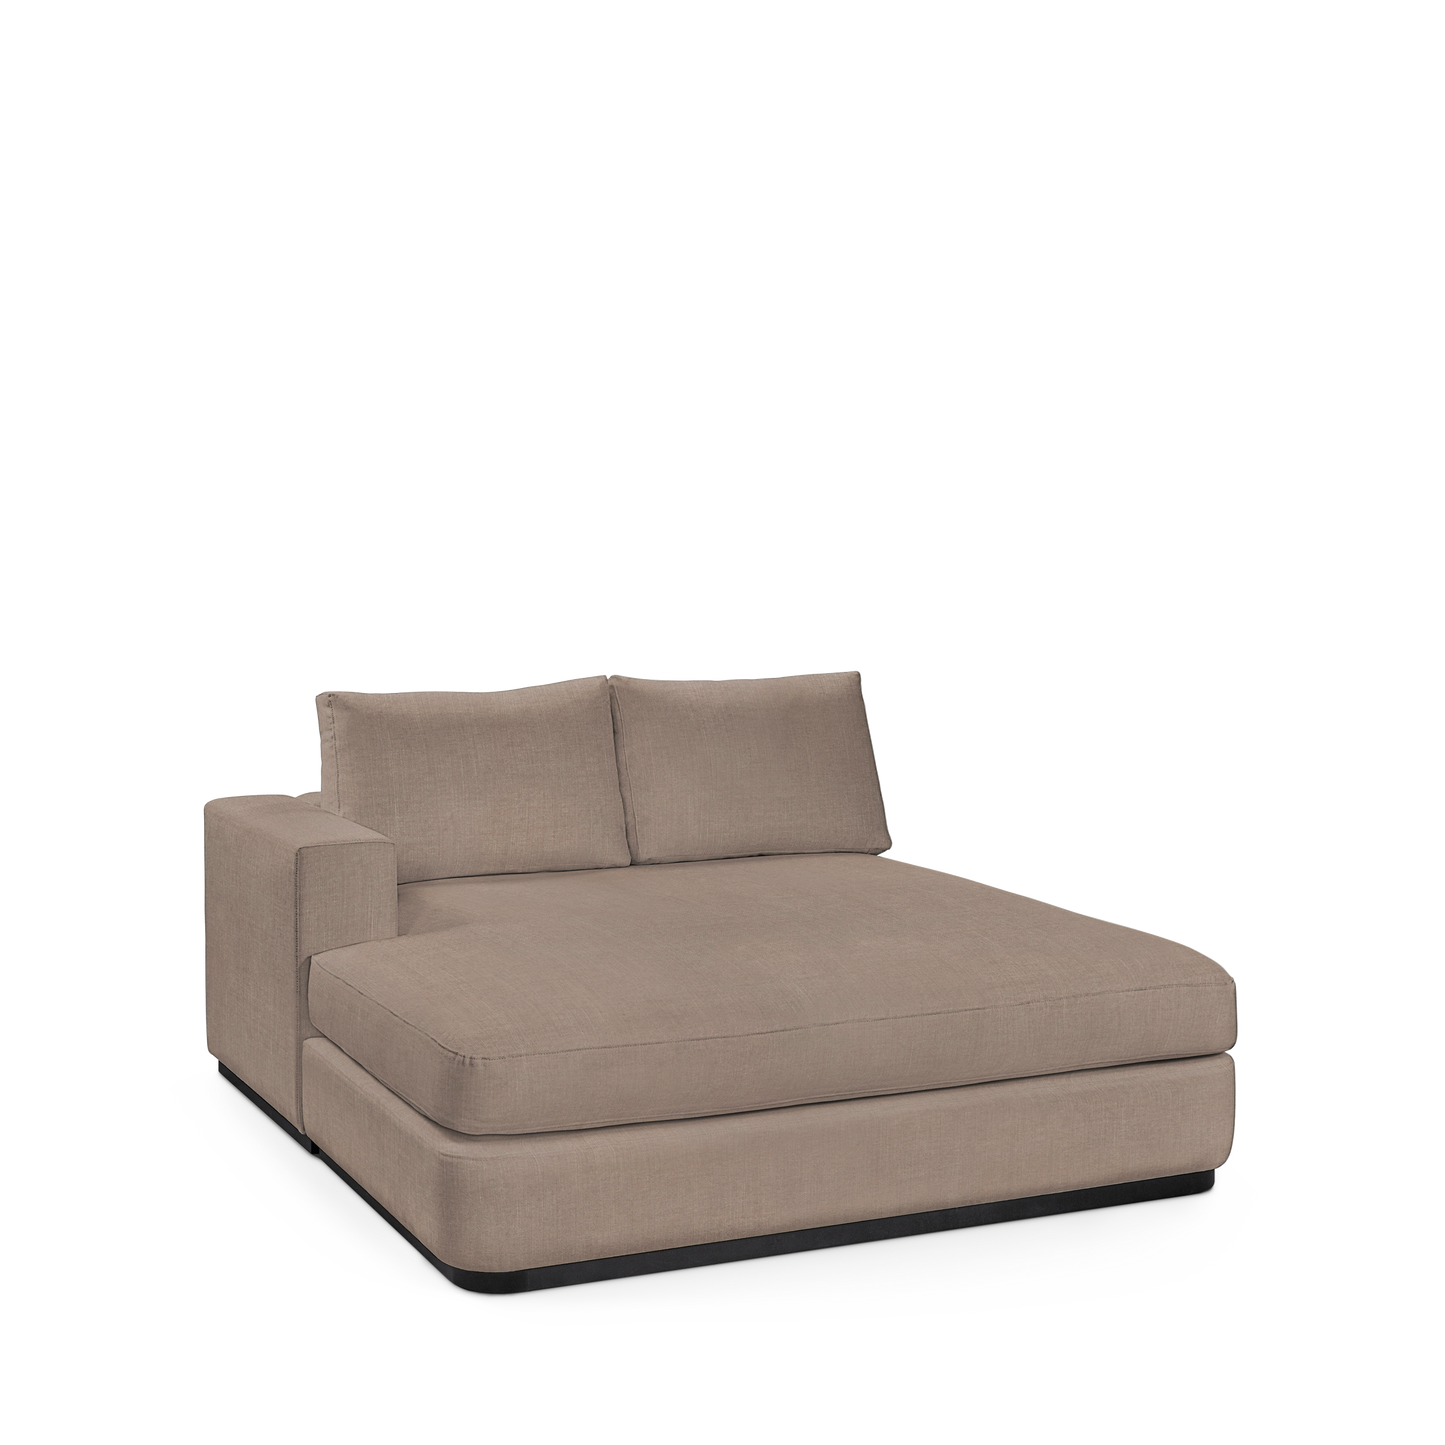 ATLAS 160 Lounge Bed arm rest left with light brown textile